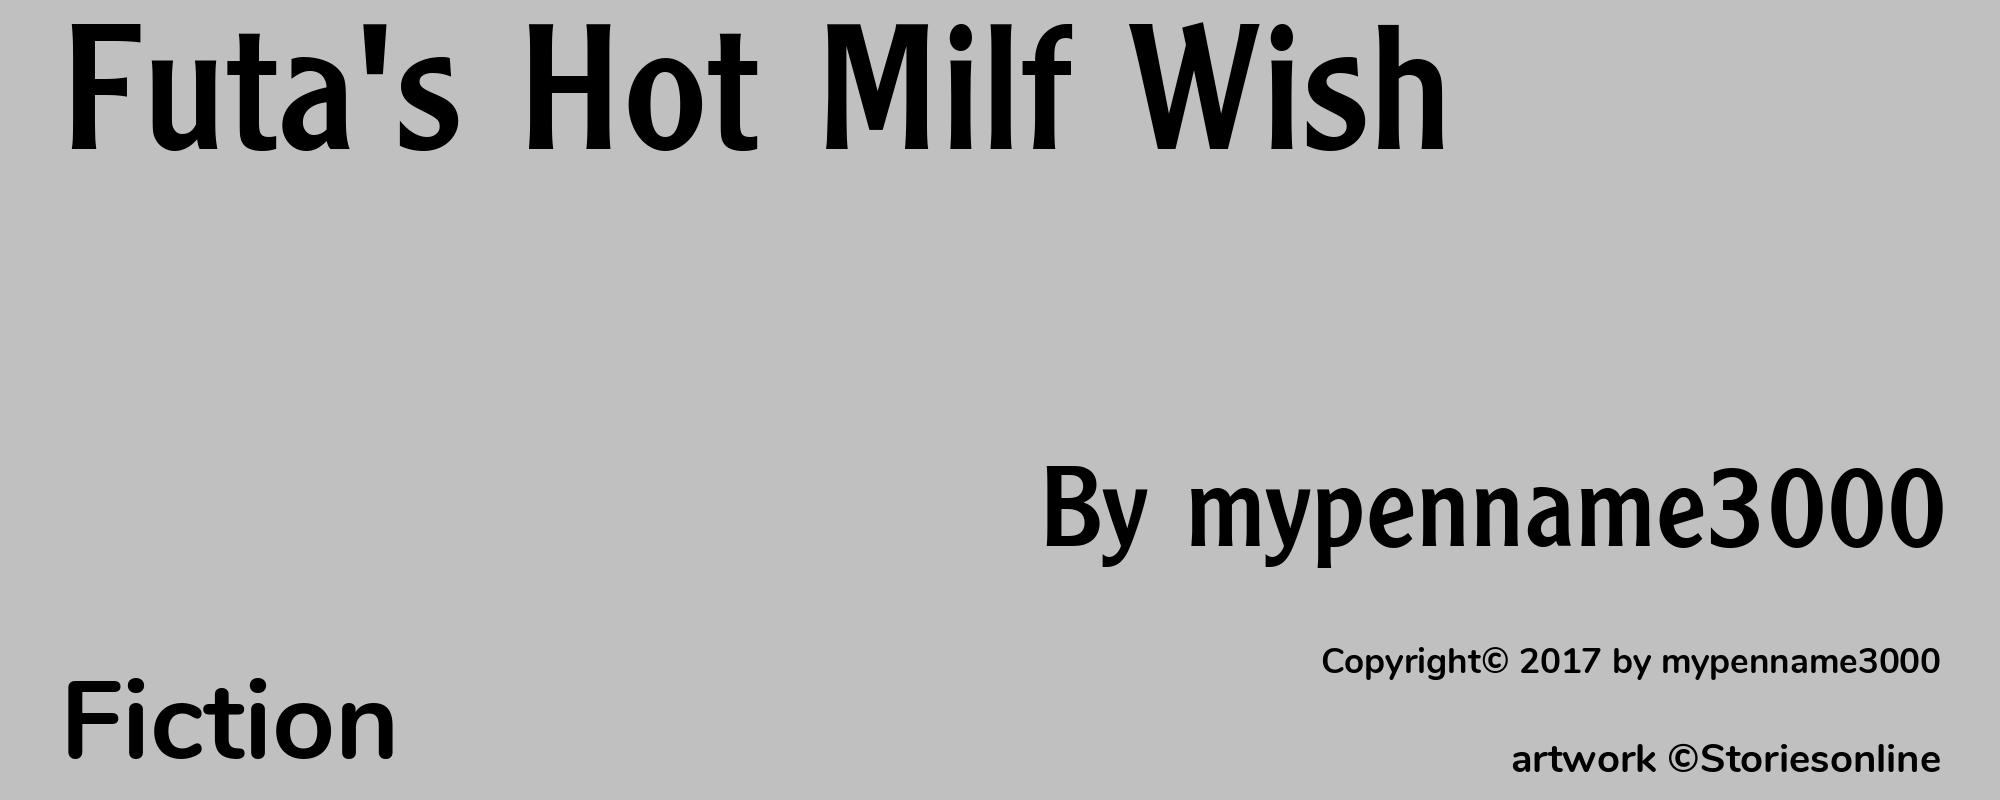 Futa's Hot Milf Wish - Cover